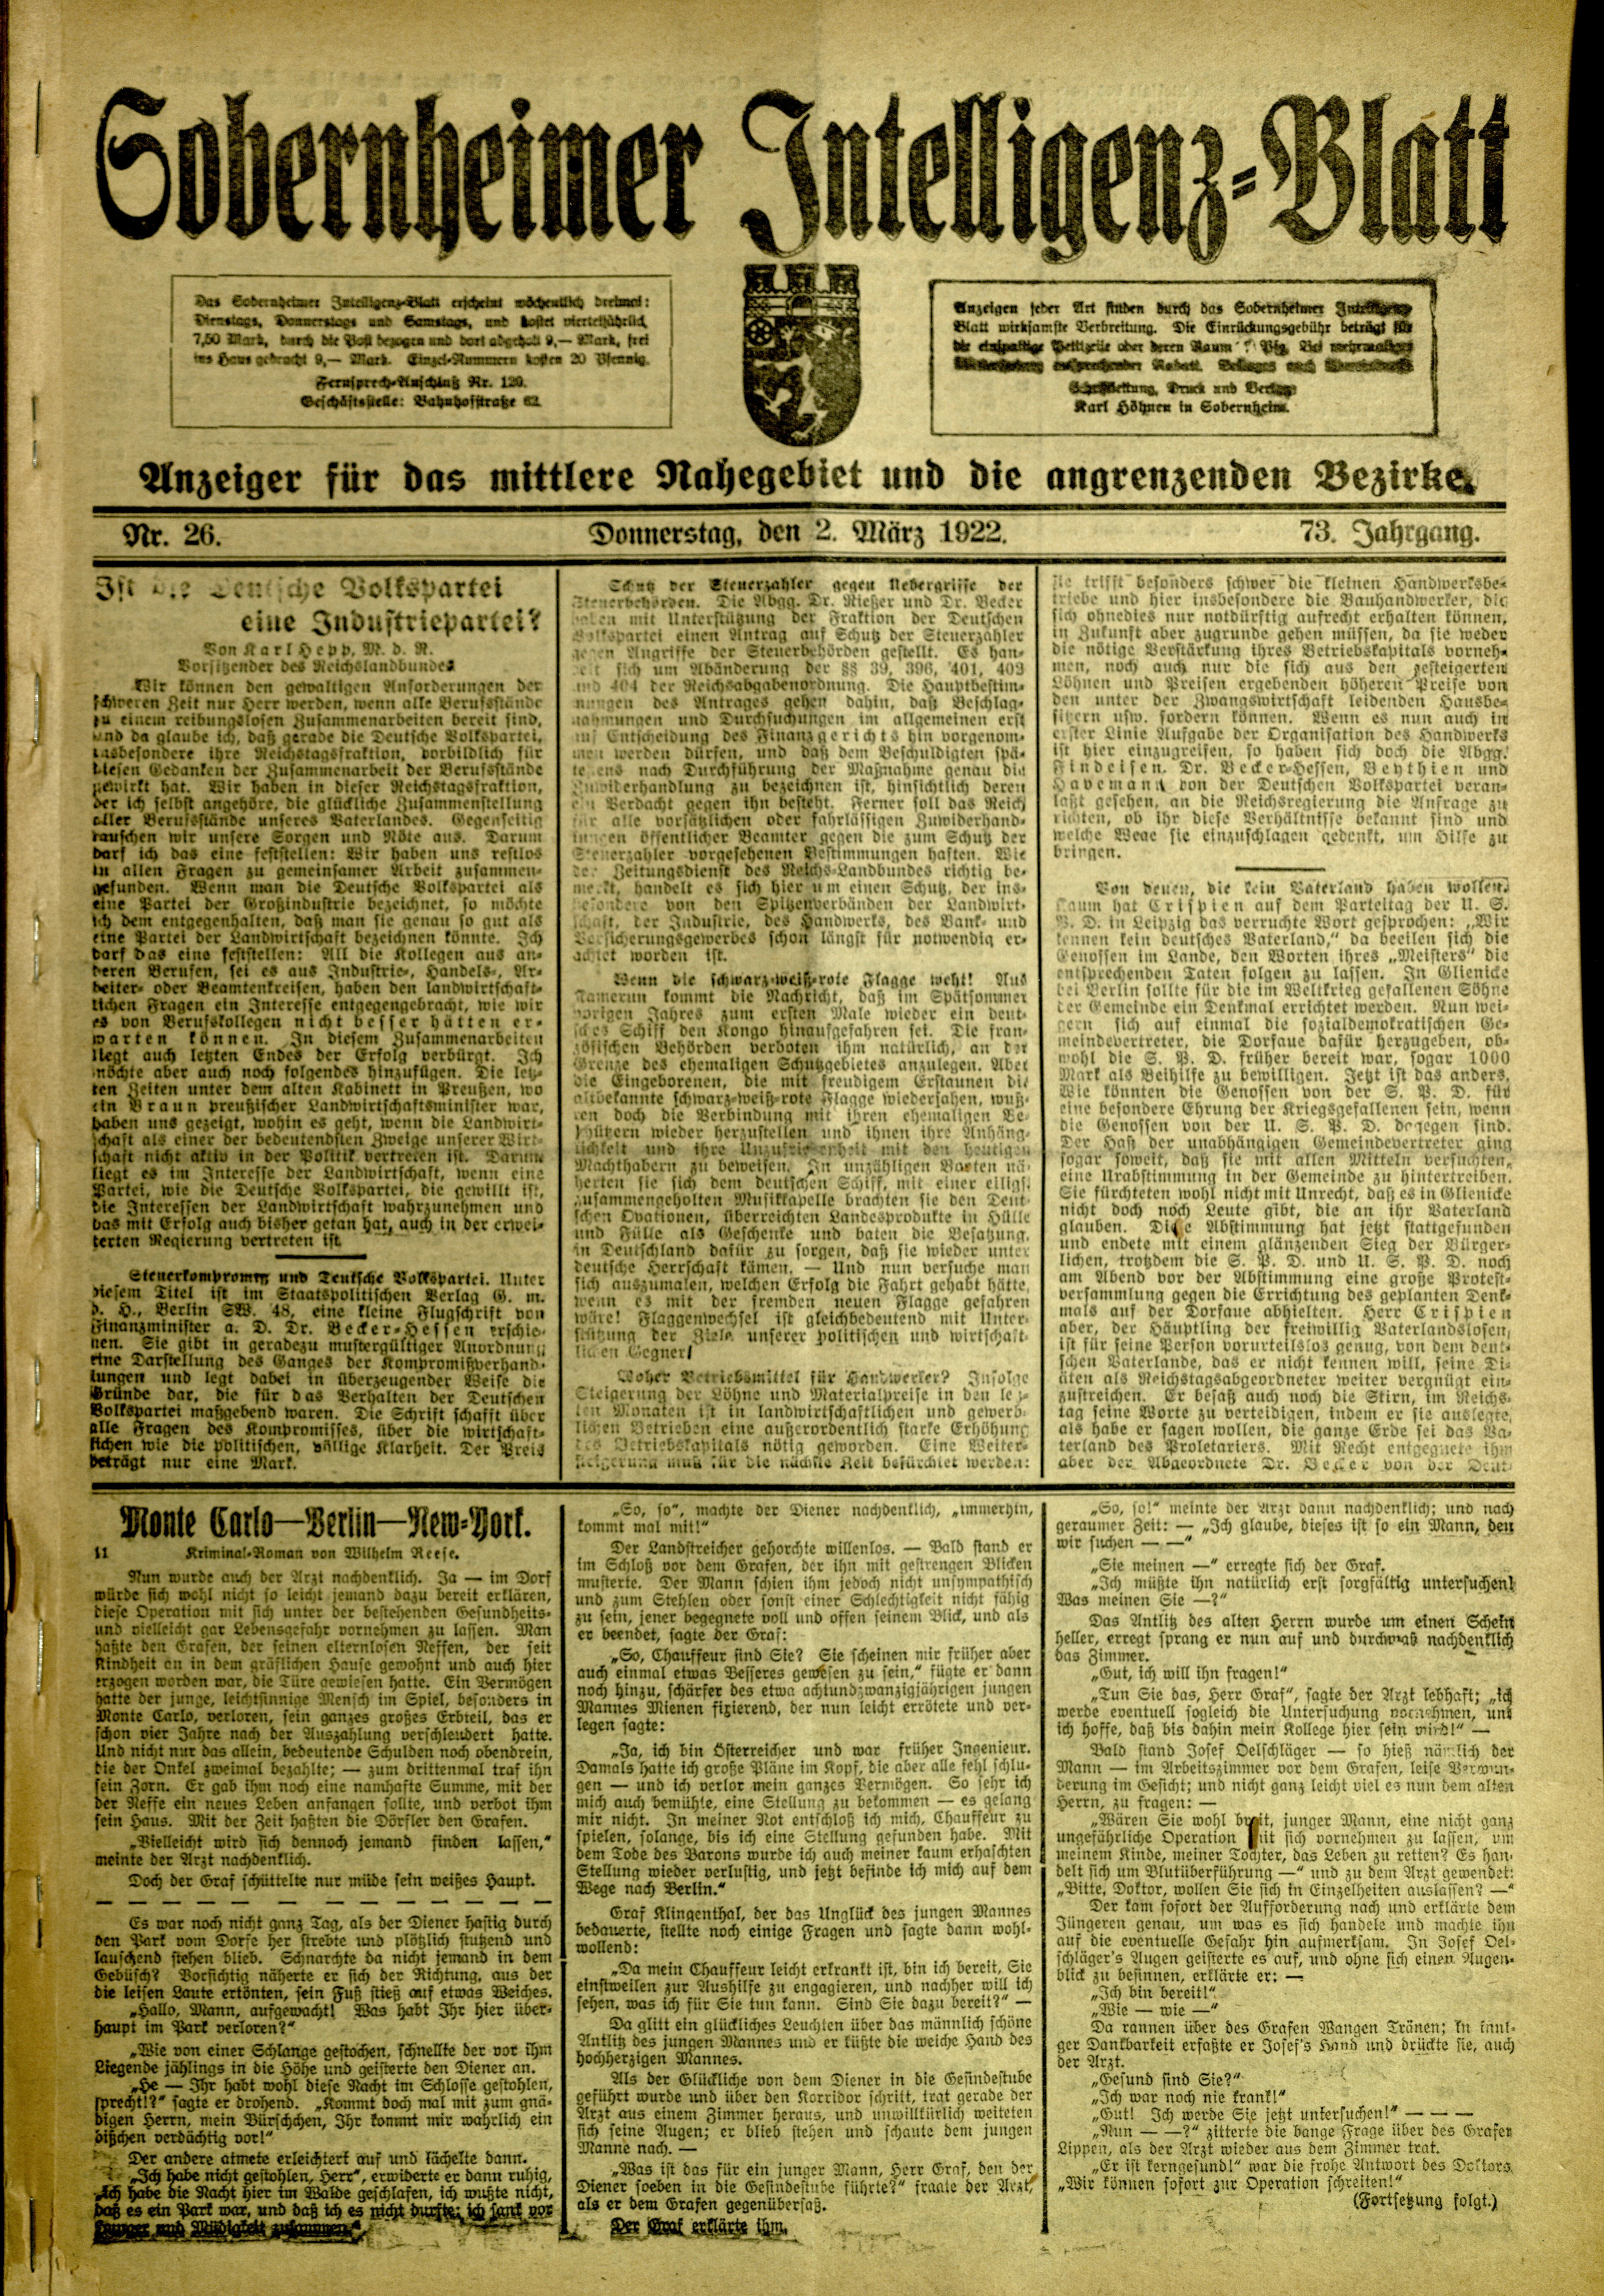 Zeitung: Sobernheimer Intelligenzblatt; März 1922, Jg. 73 Nr. 26 (Heimatmuseum Bad Sobernheim CC BY-NC-SA)